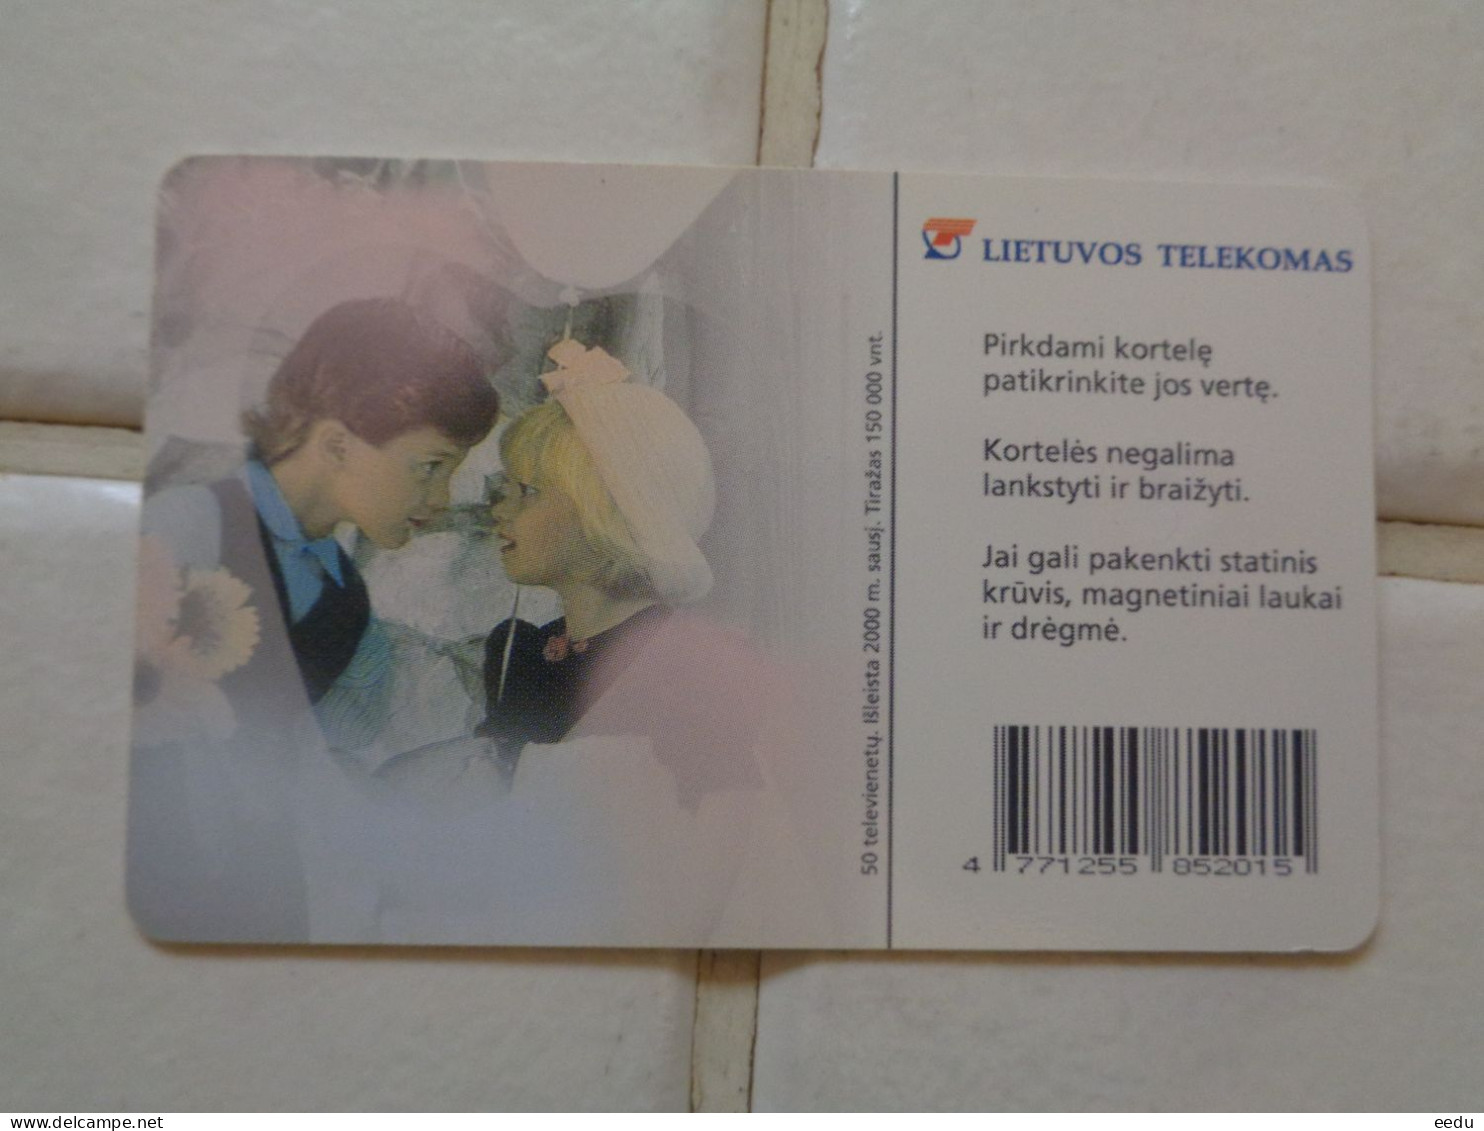 Lithuania Phonecard - Lithuania